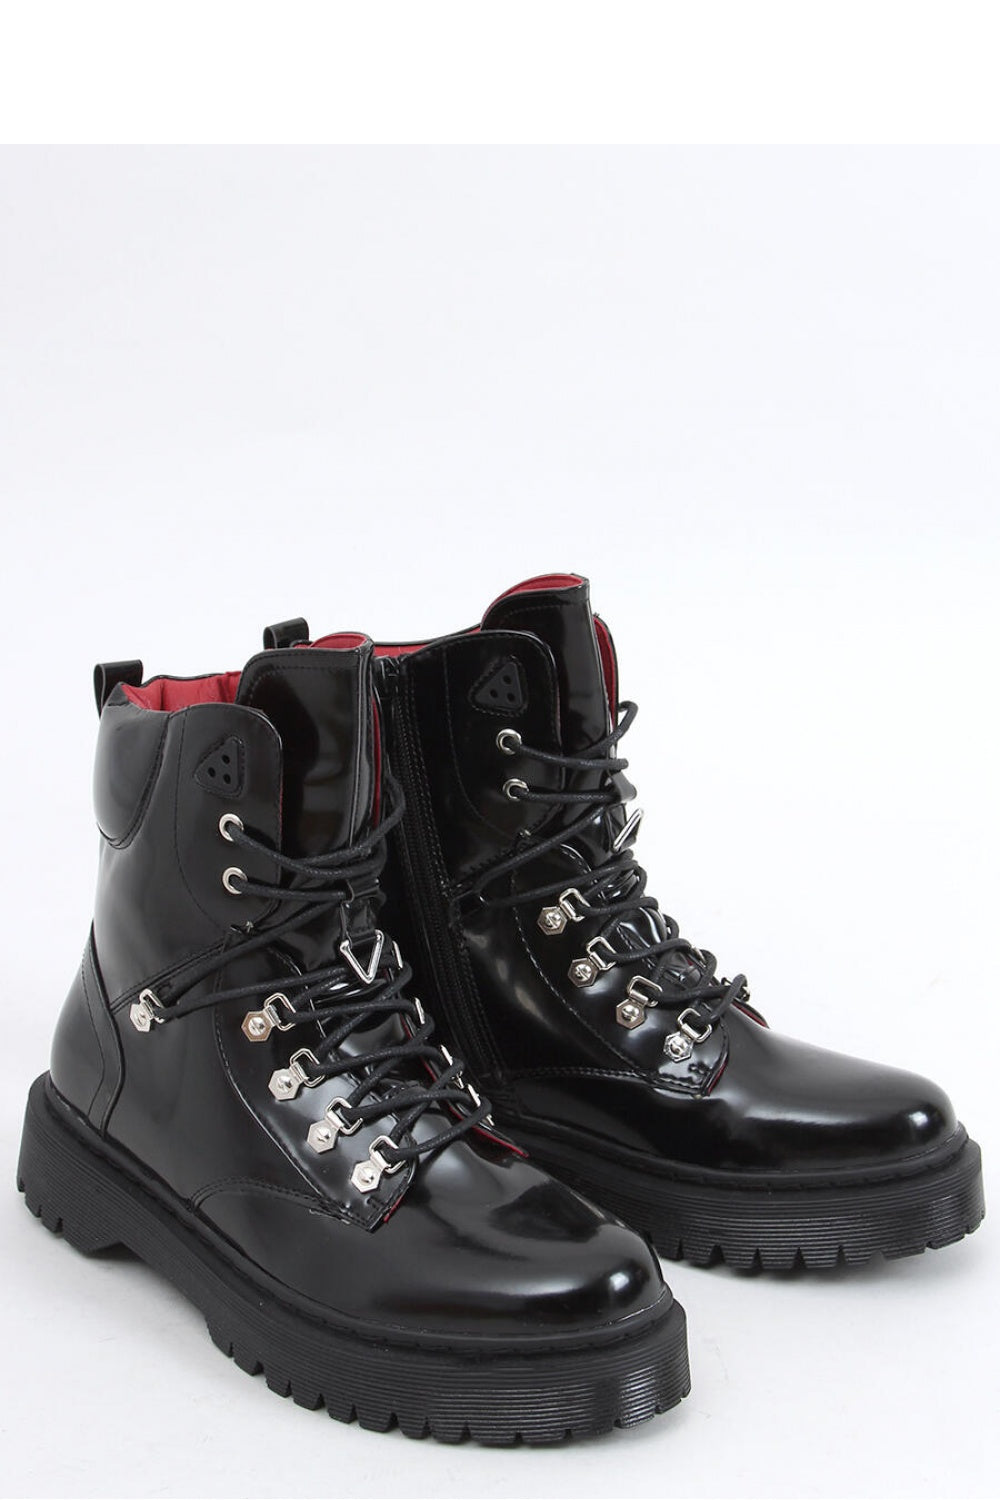 Boots model 160289 Inello Posh Styles Apparel